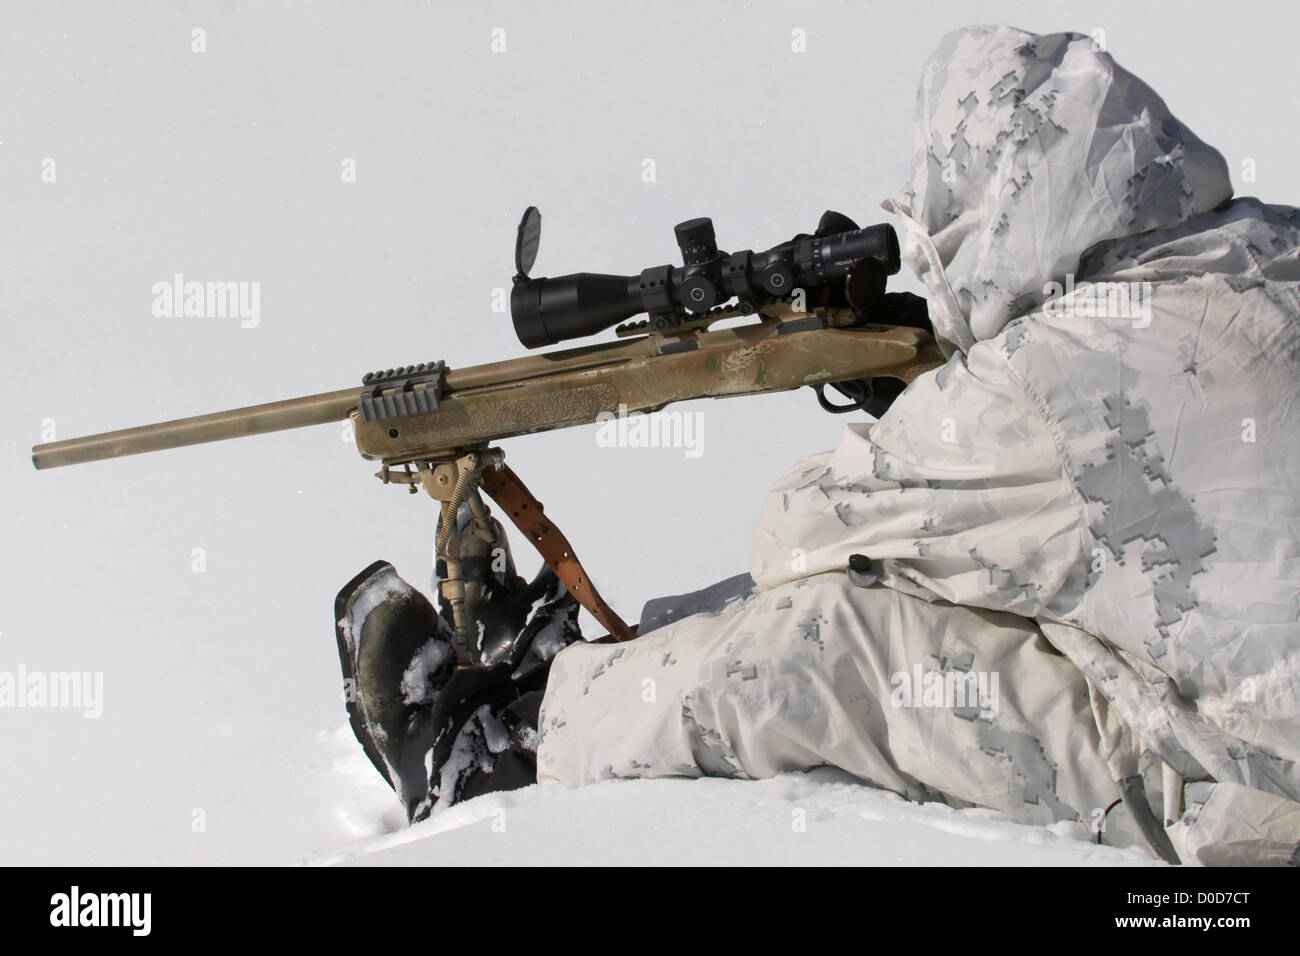 US Marine Sniper Aims an M40 Sniper Rifle During Mountain Warfare Training Stock Photo